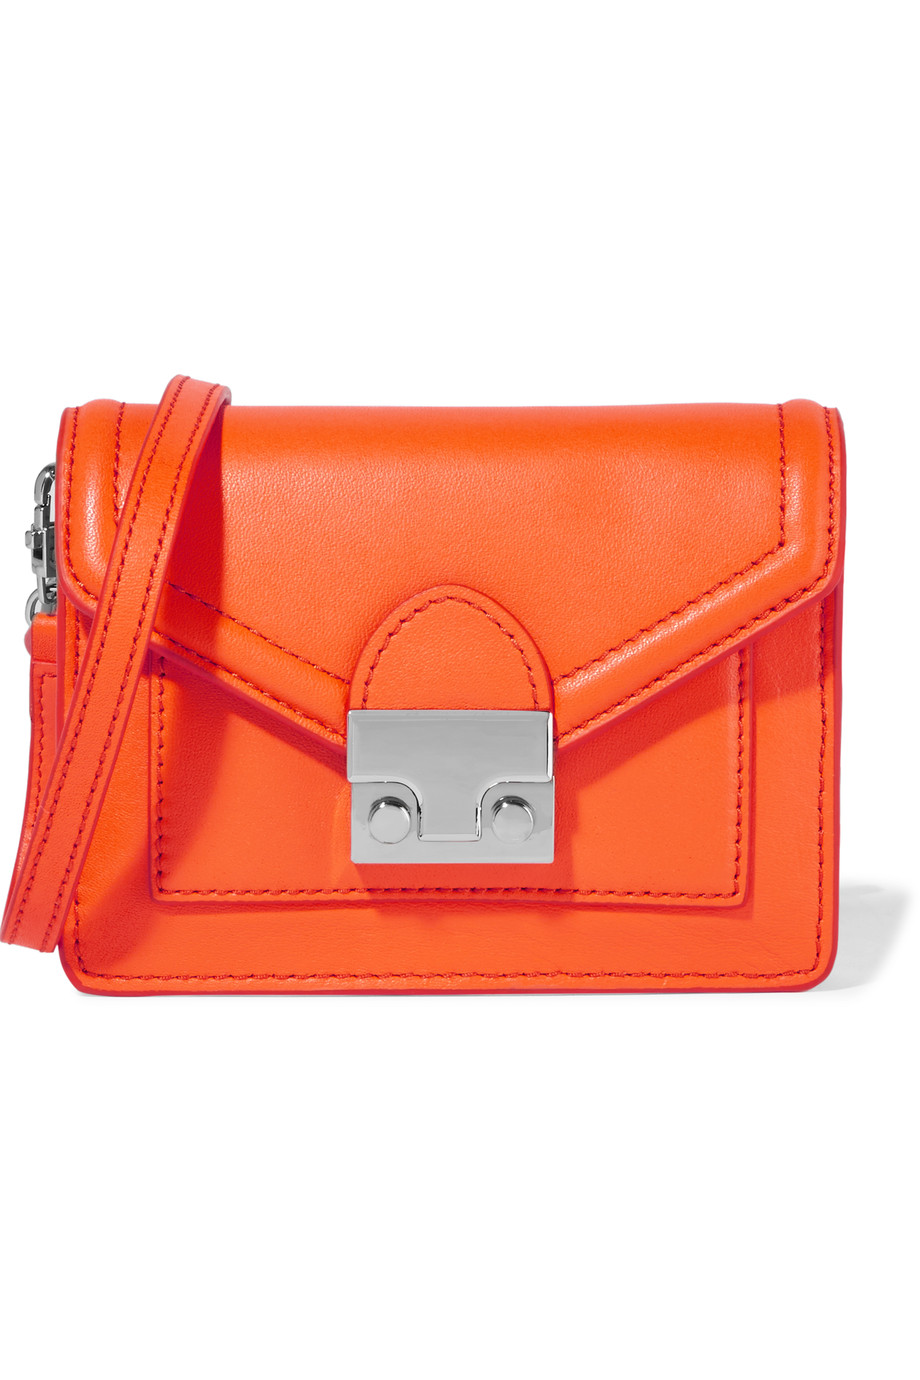 Loeffler Randall Mini Leather Shoulder Bag | ModeSens